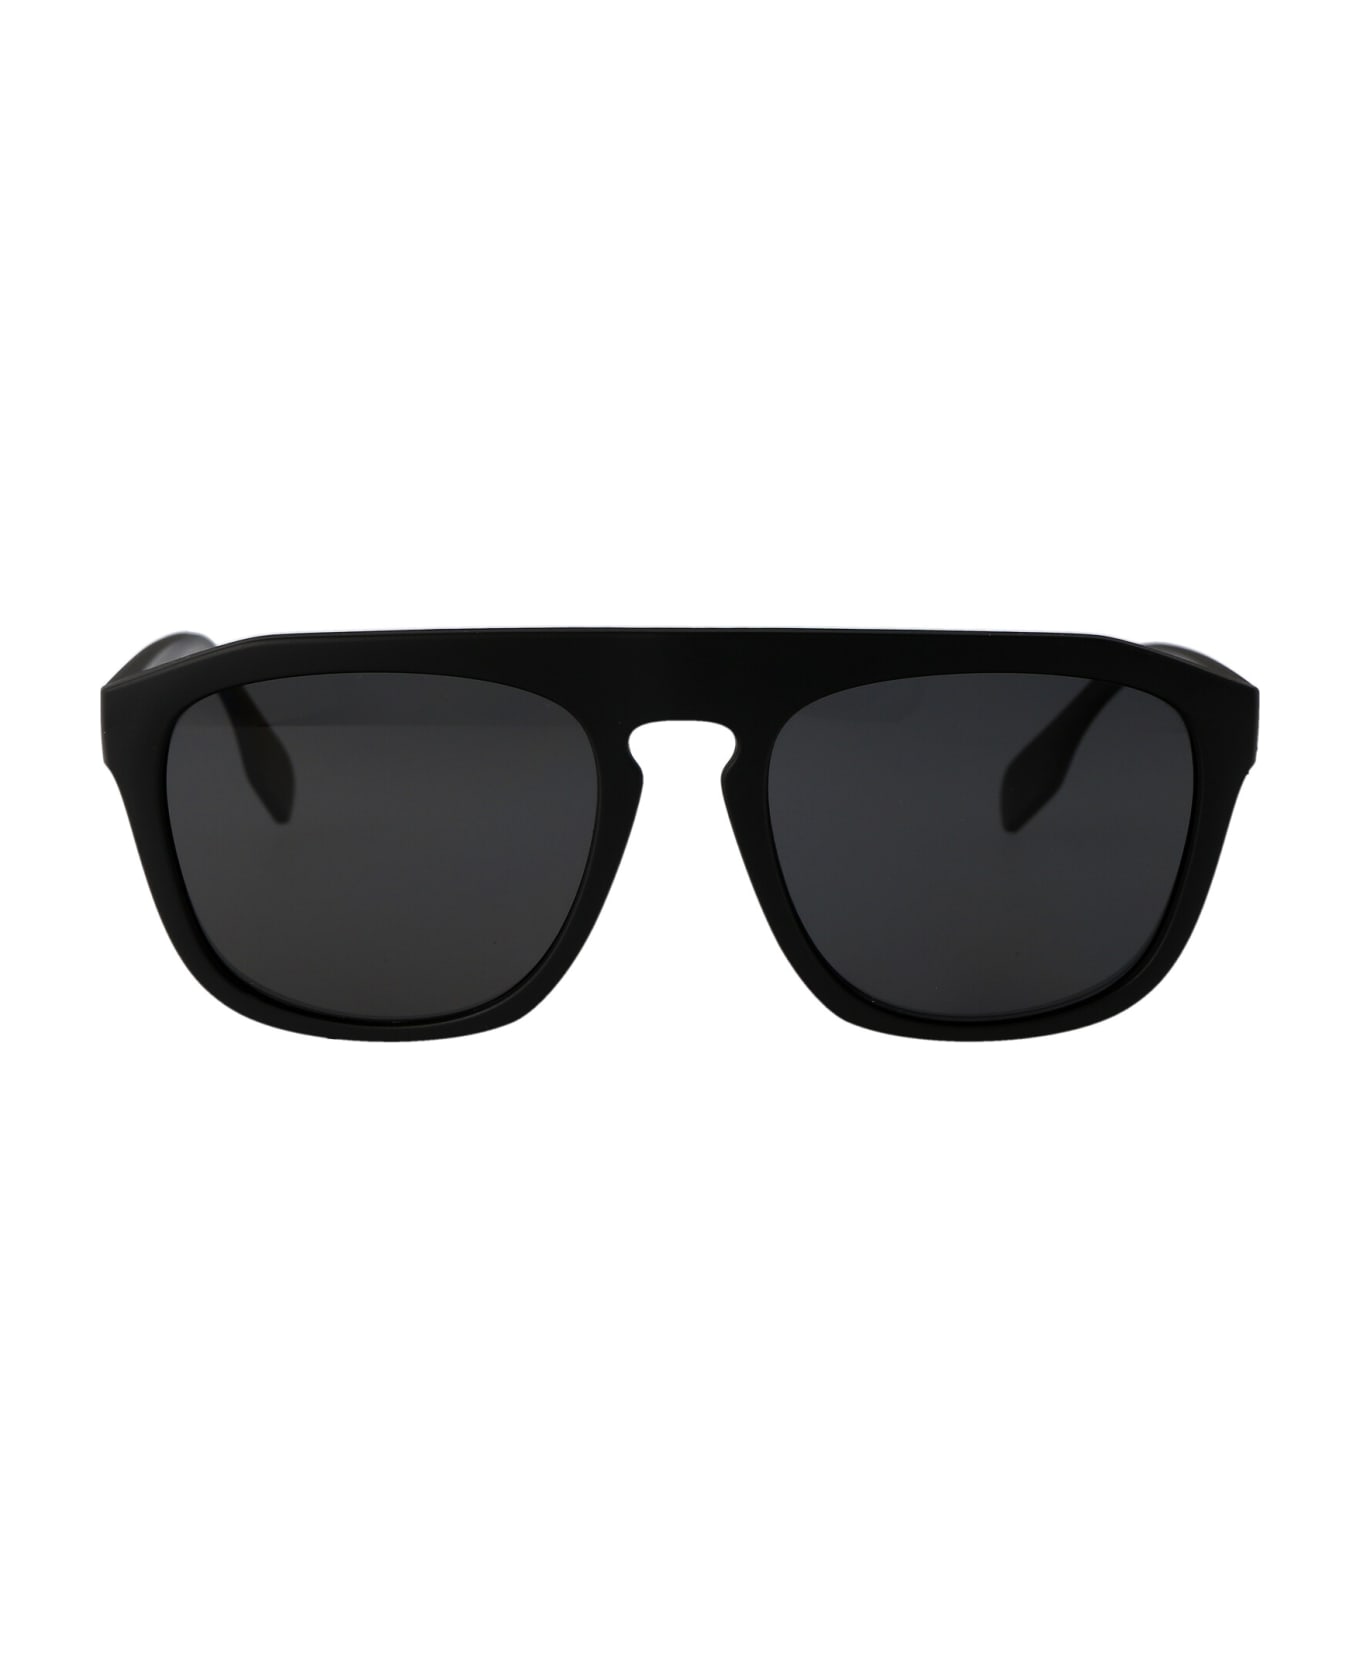 Burberry Eyewear Wren Sunglasses - 346487 MATTE BLACK